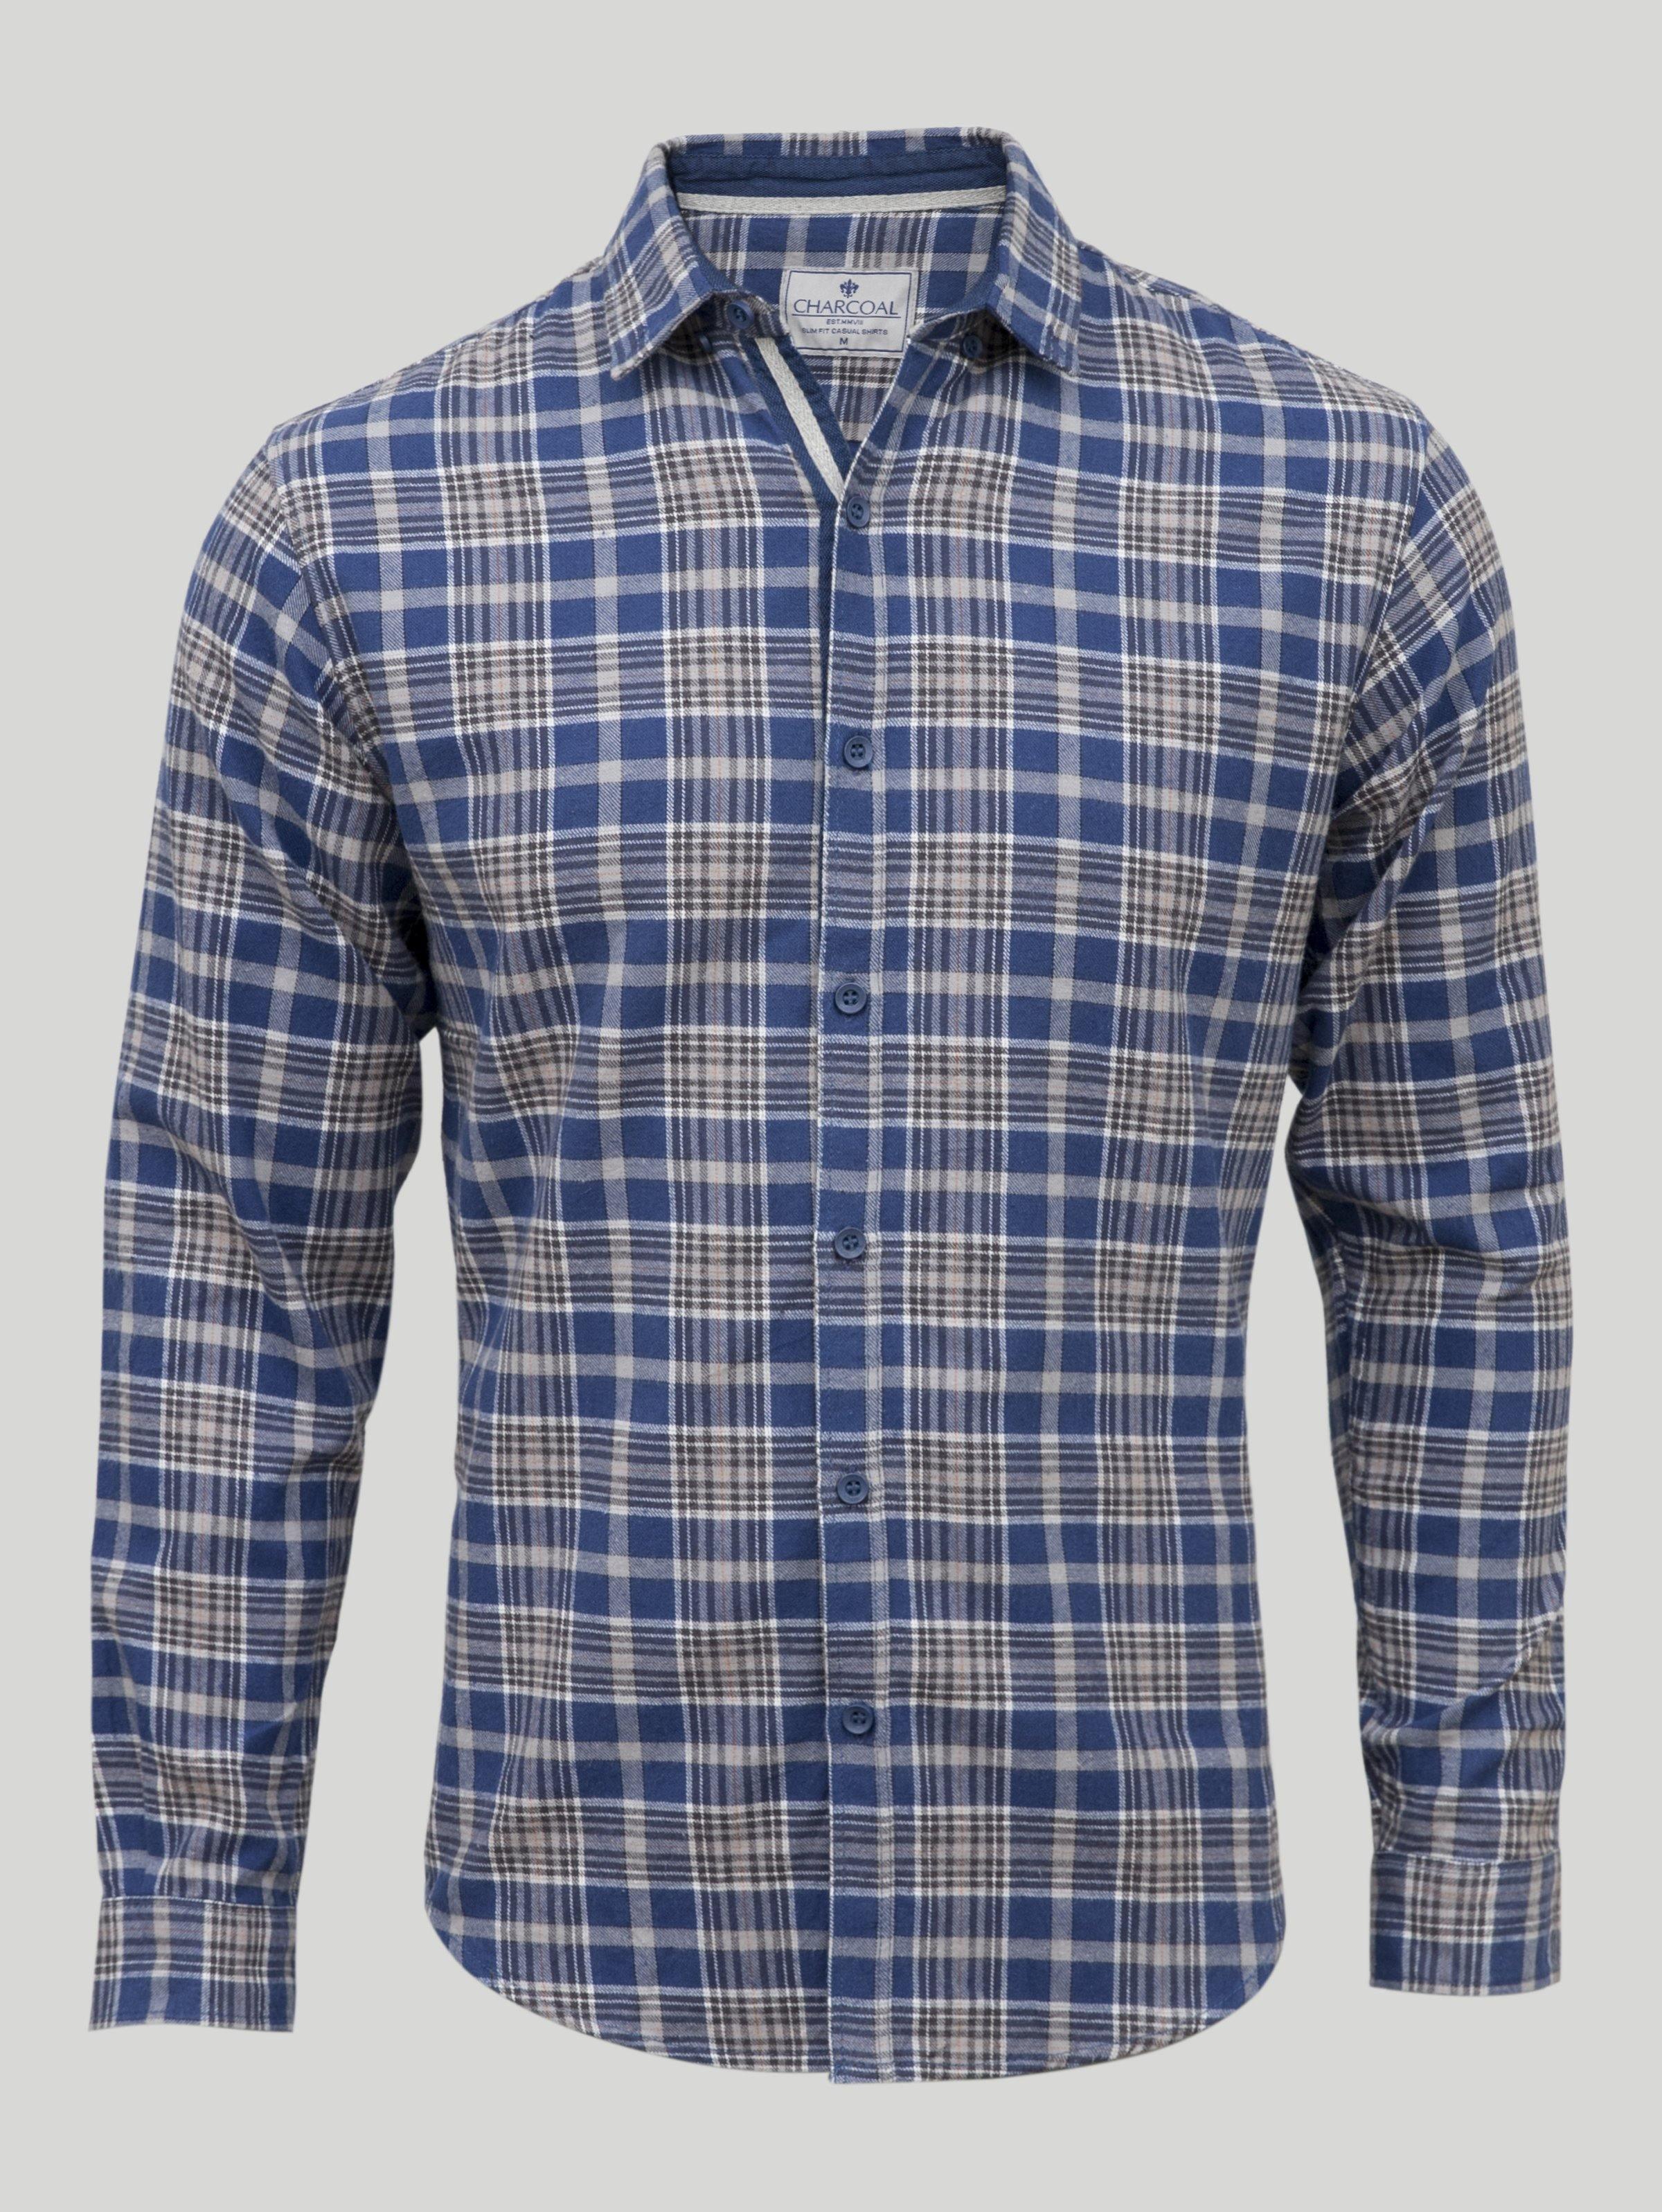 Casual Shirt Full Sleeve Blue Check WINTER at Charcoal Clothing